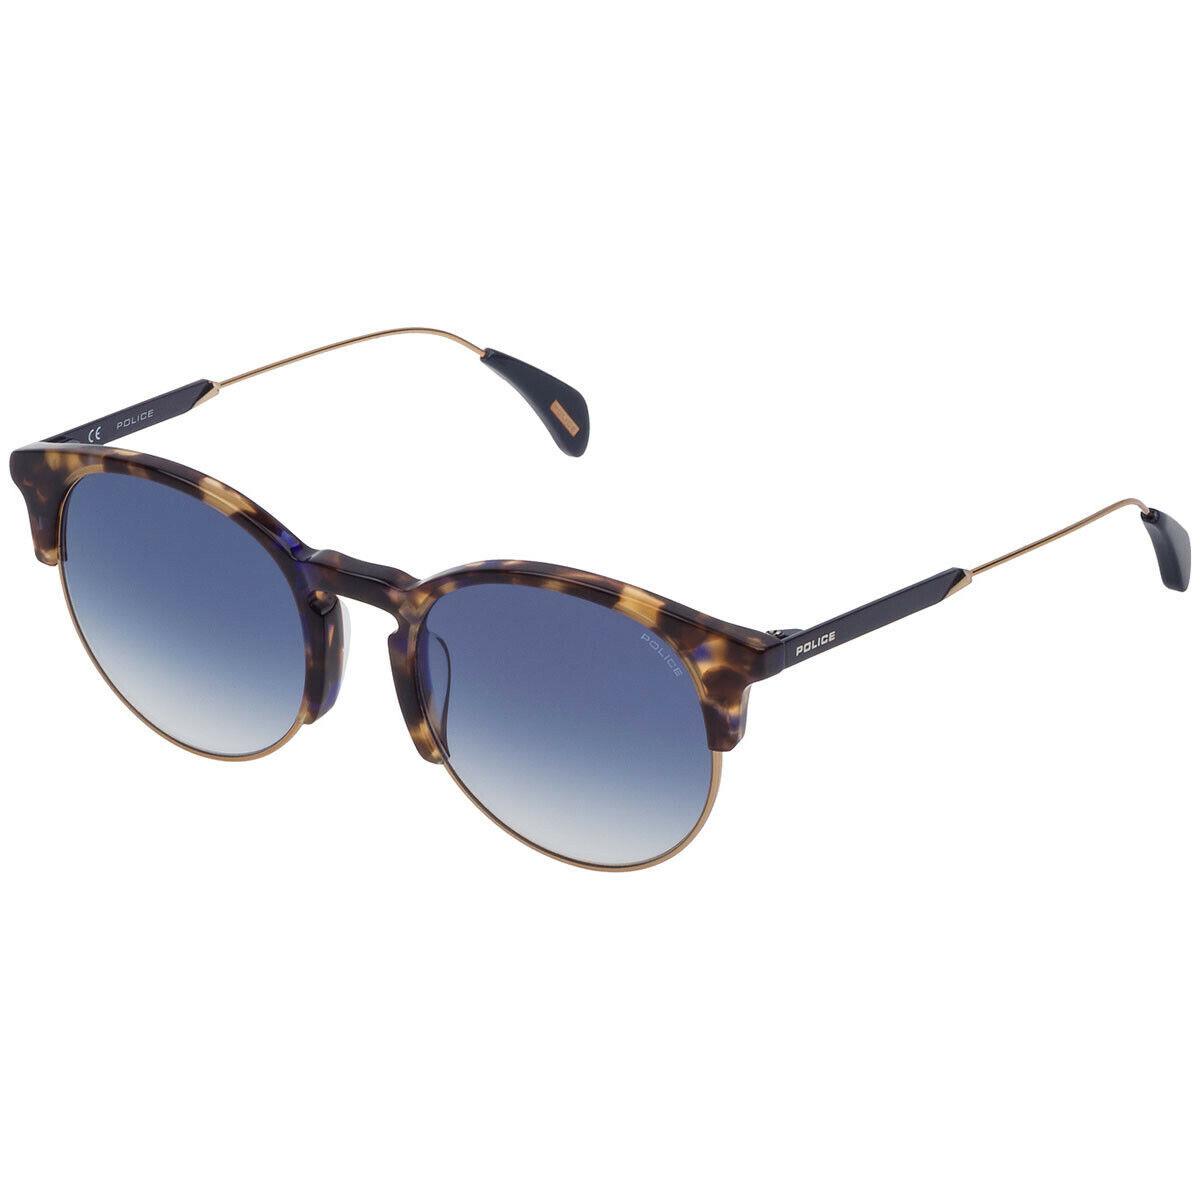 Police Sunglasses Affair 4 SPL738 0744 Shiny Havana/blue Gradient 51 mm